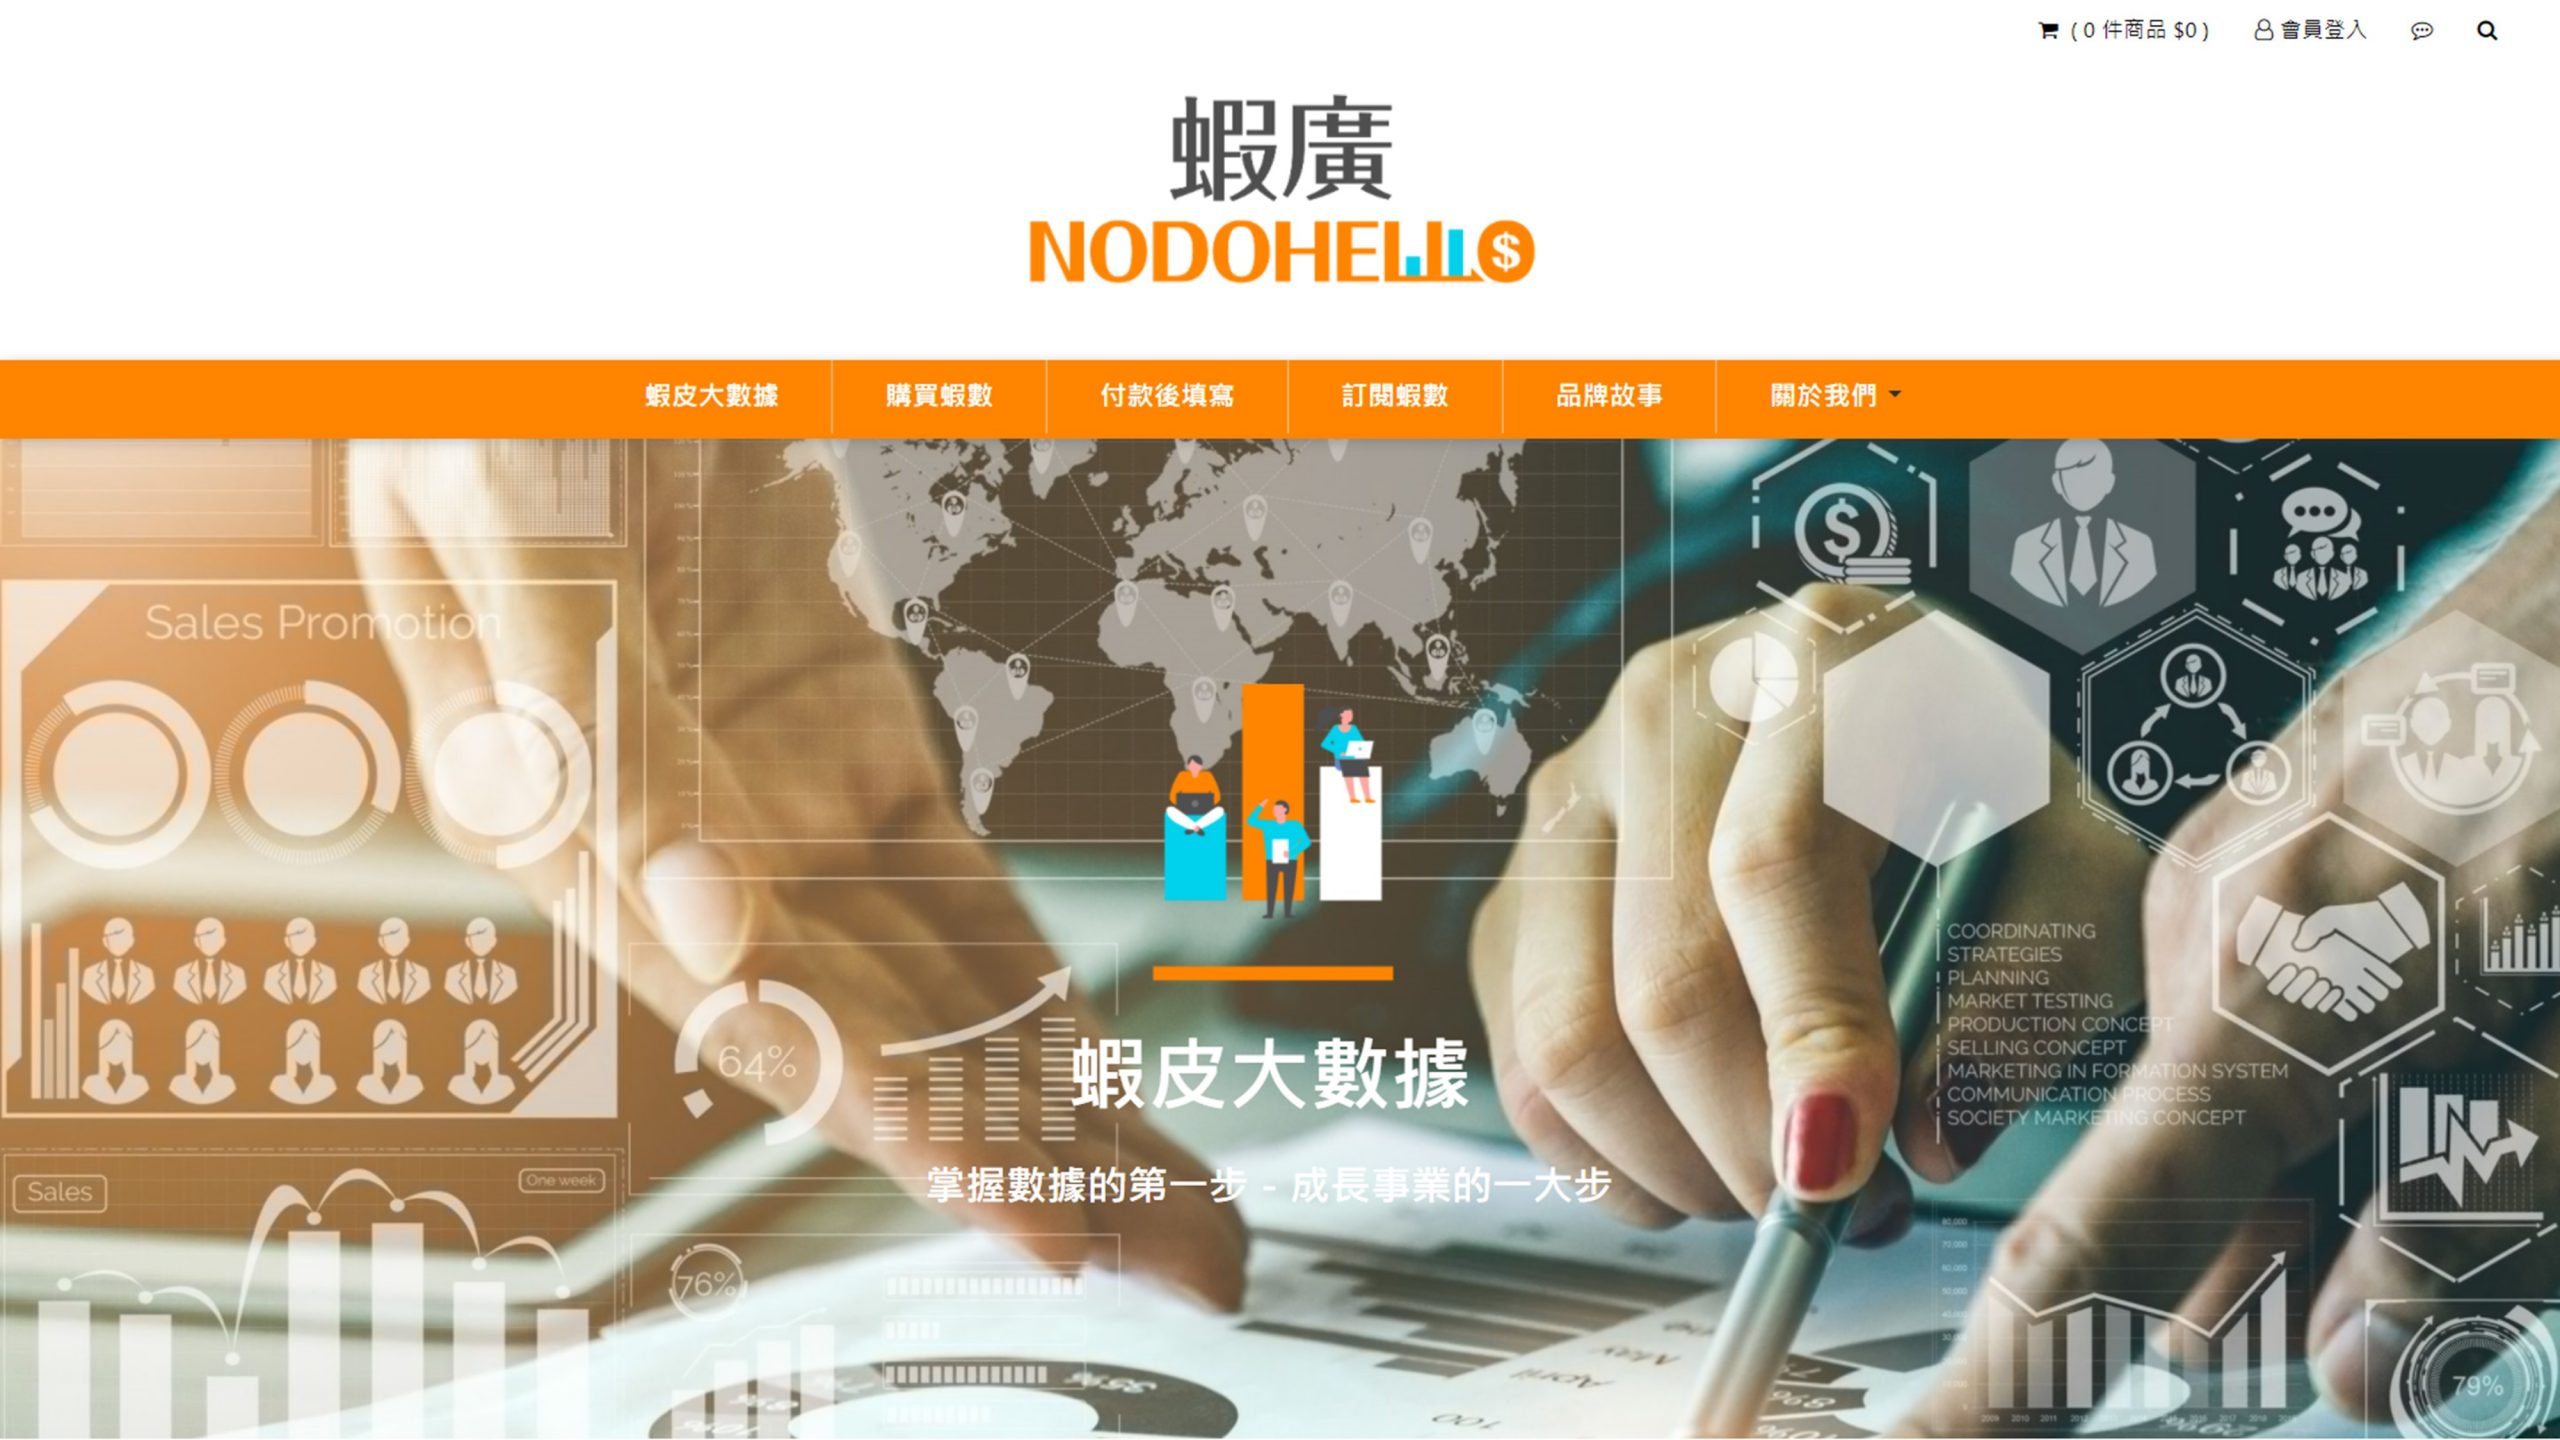 nodohello-featured-image